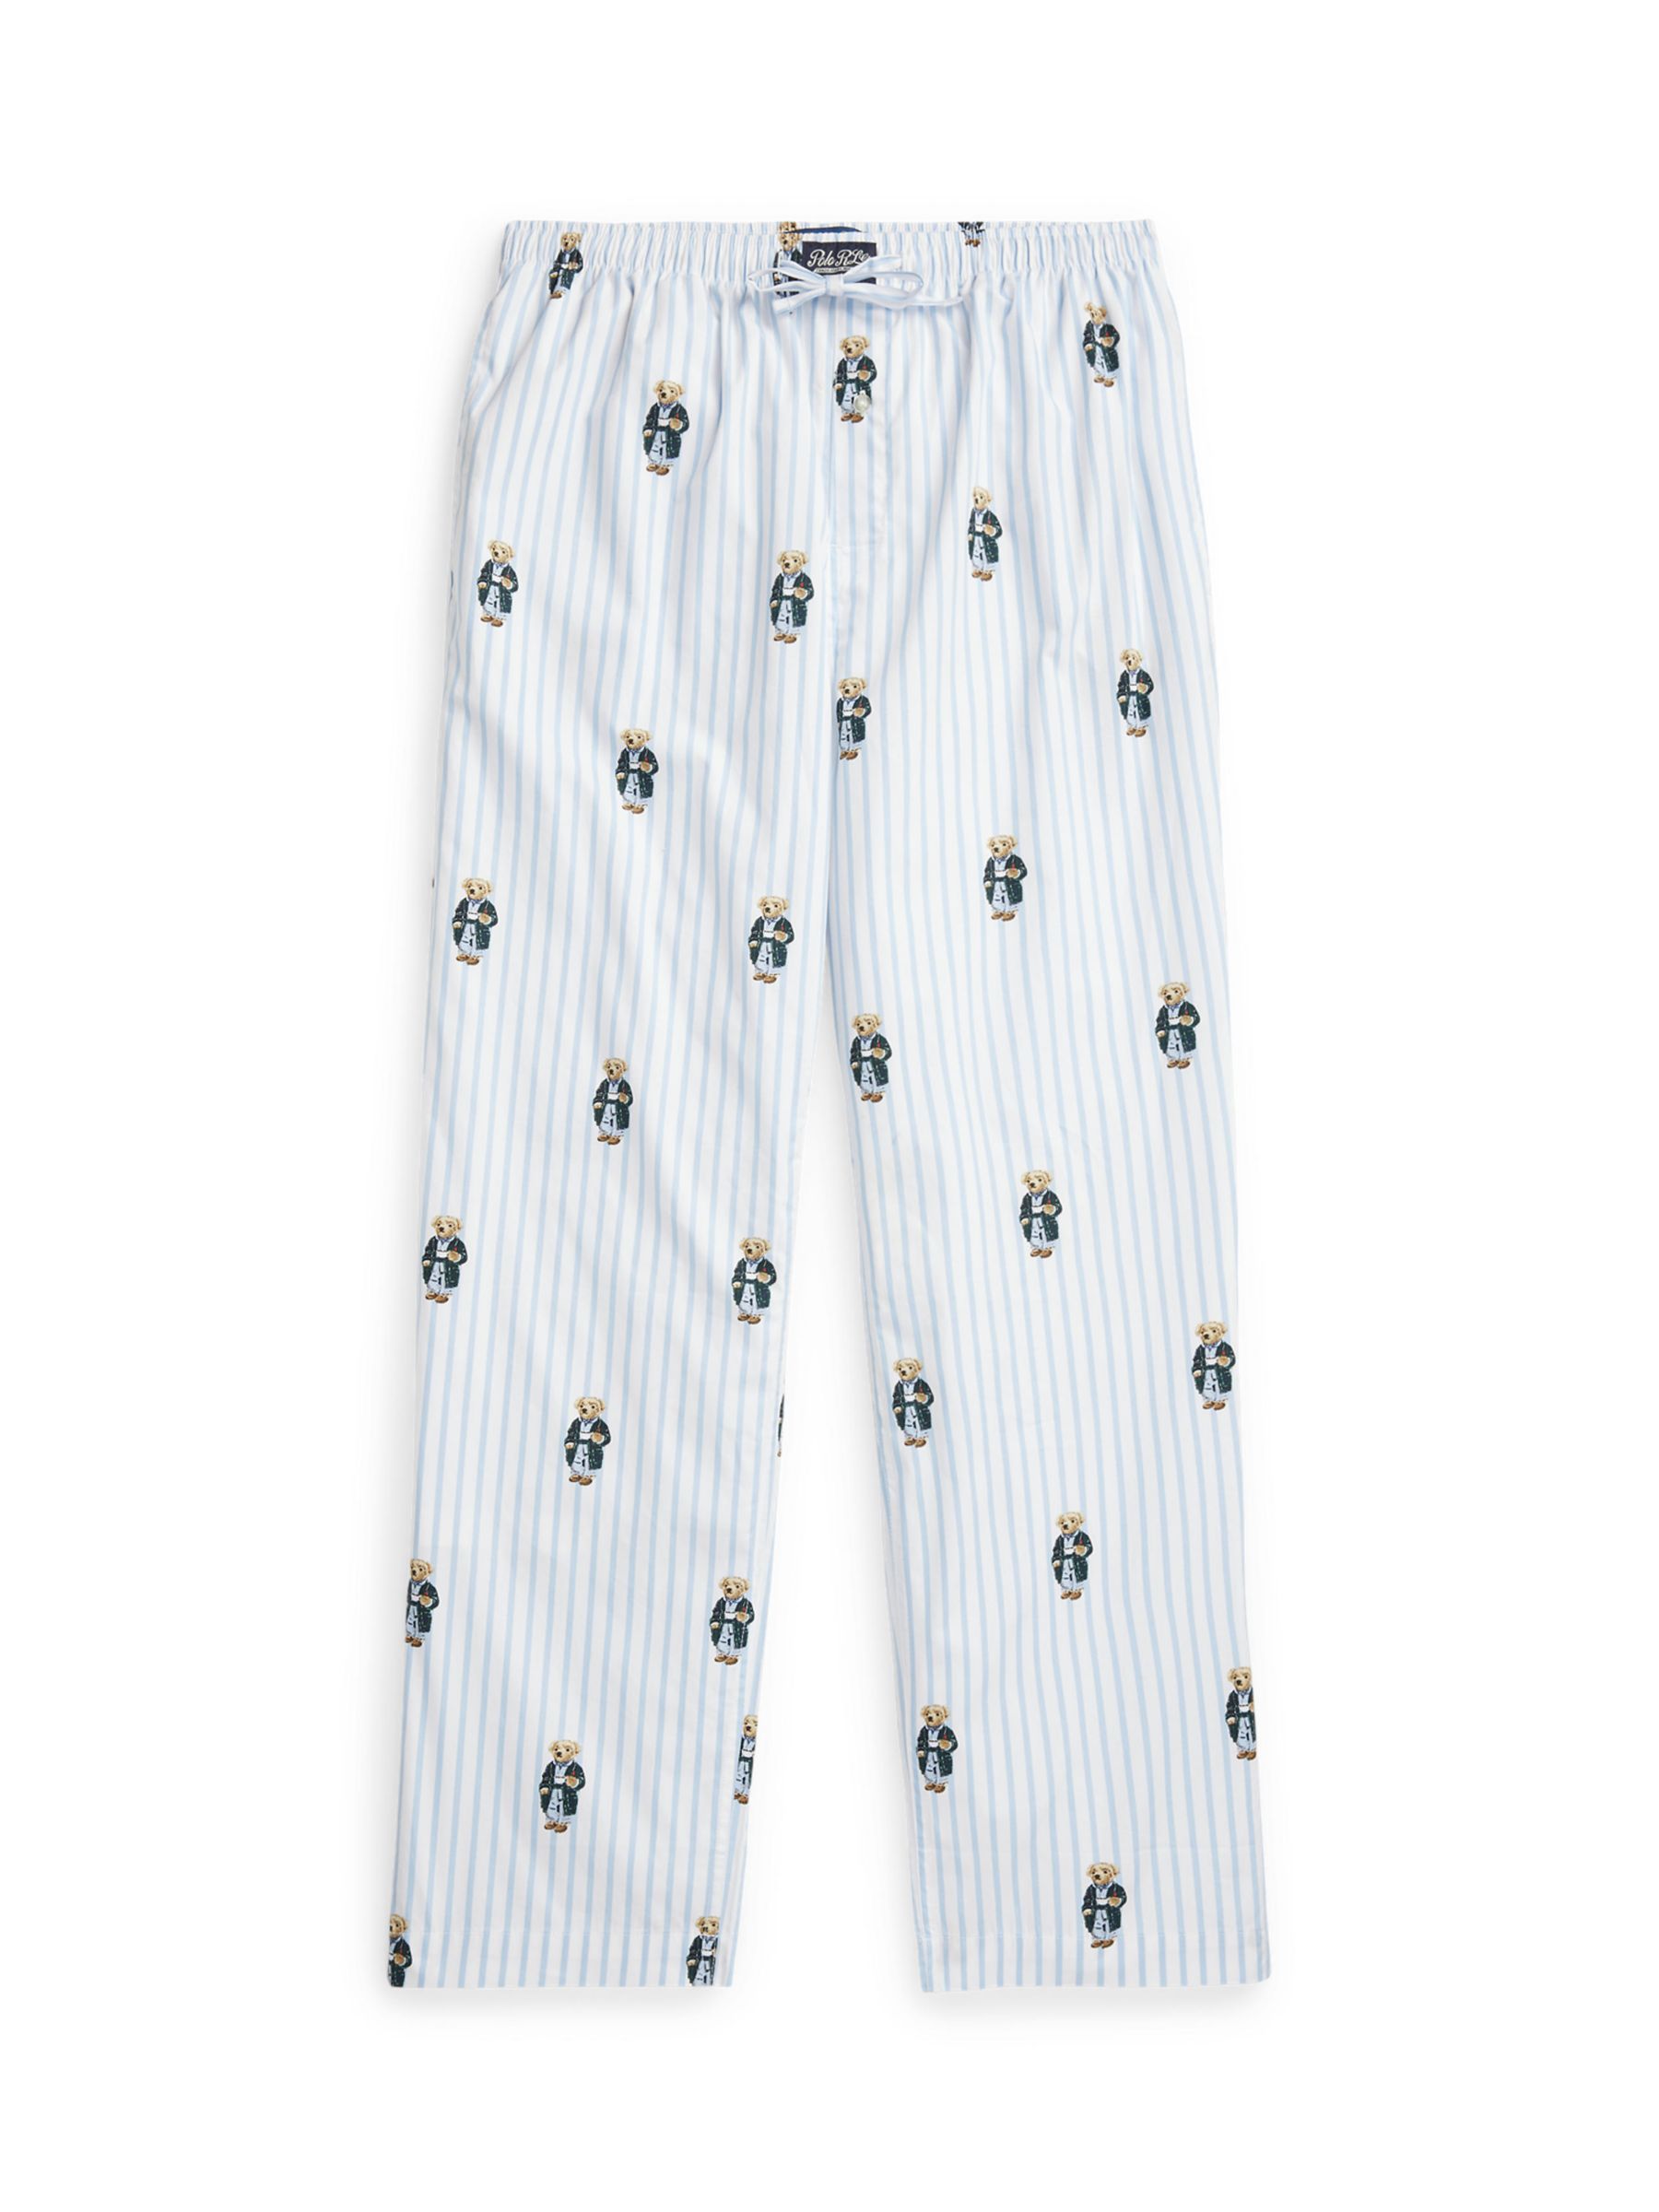 Polo Ralph Lauren Navy Ski Bear Cotton Jersey 2 Piece Pajama Sleep Set New